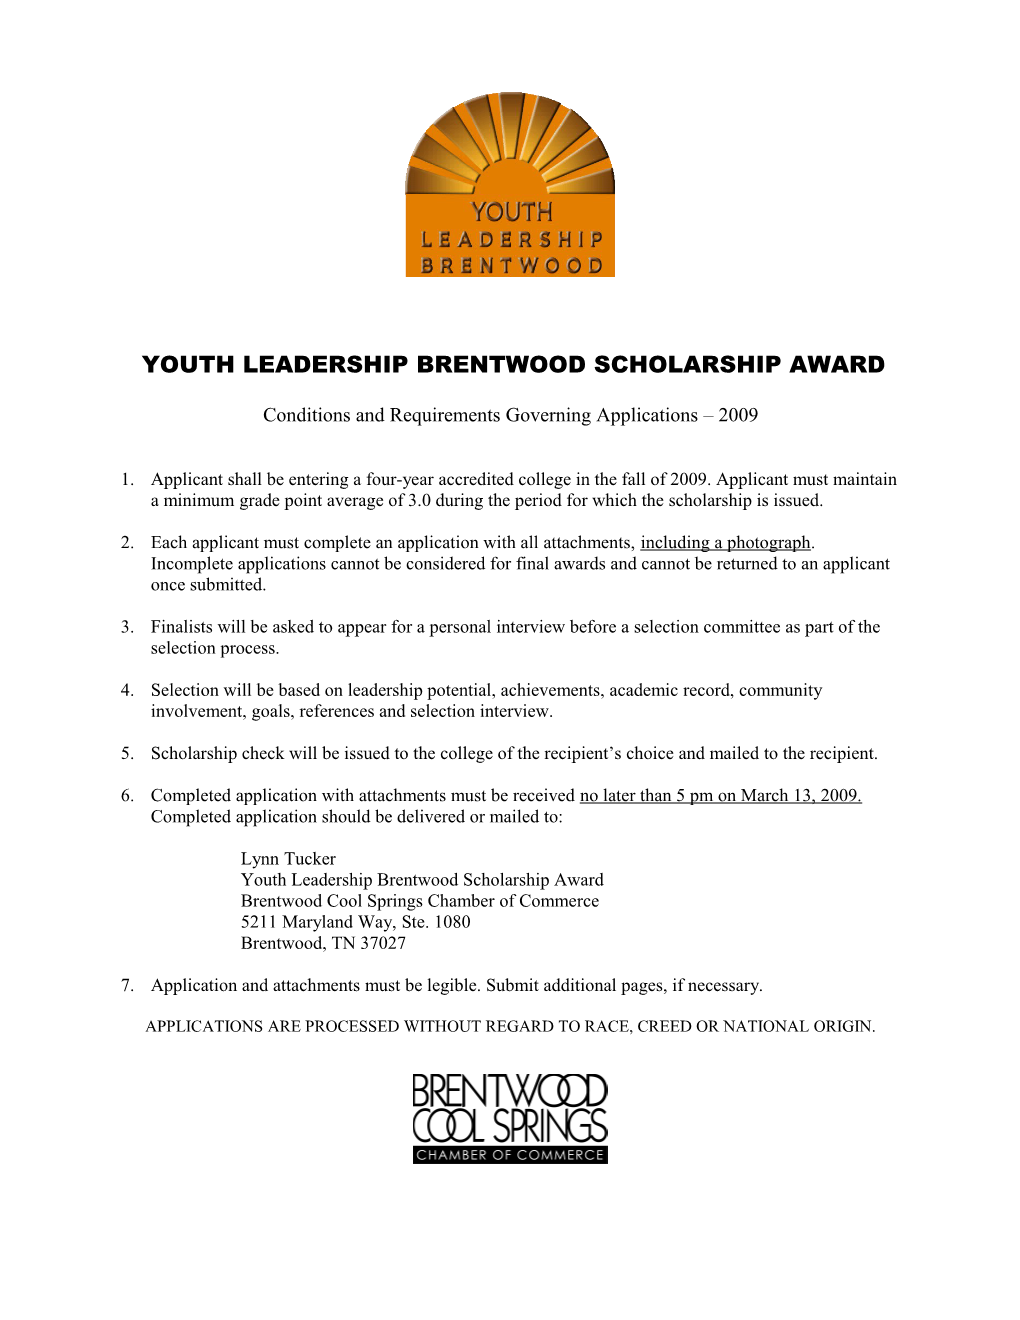 Leadership Brentwood Scholarship Award